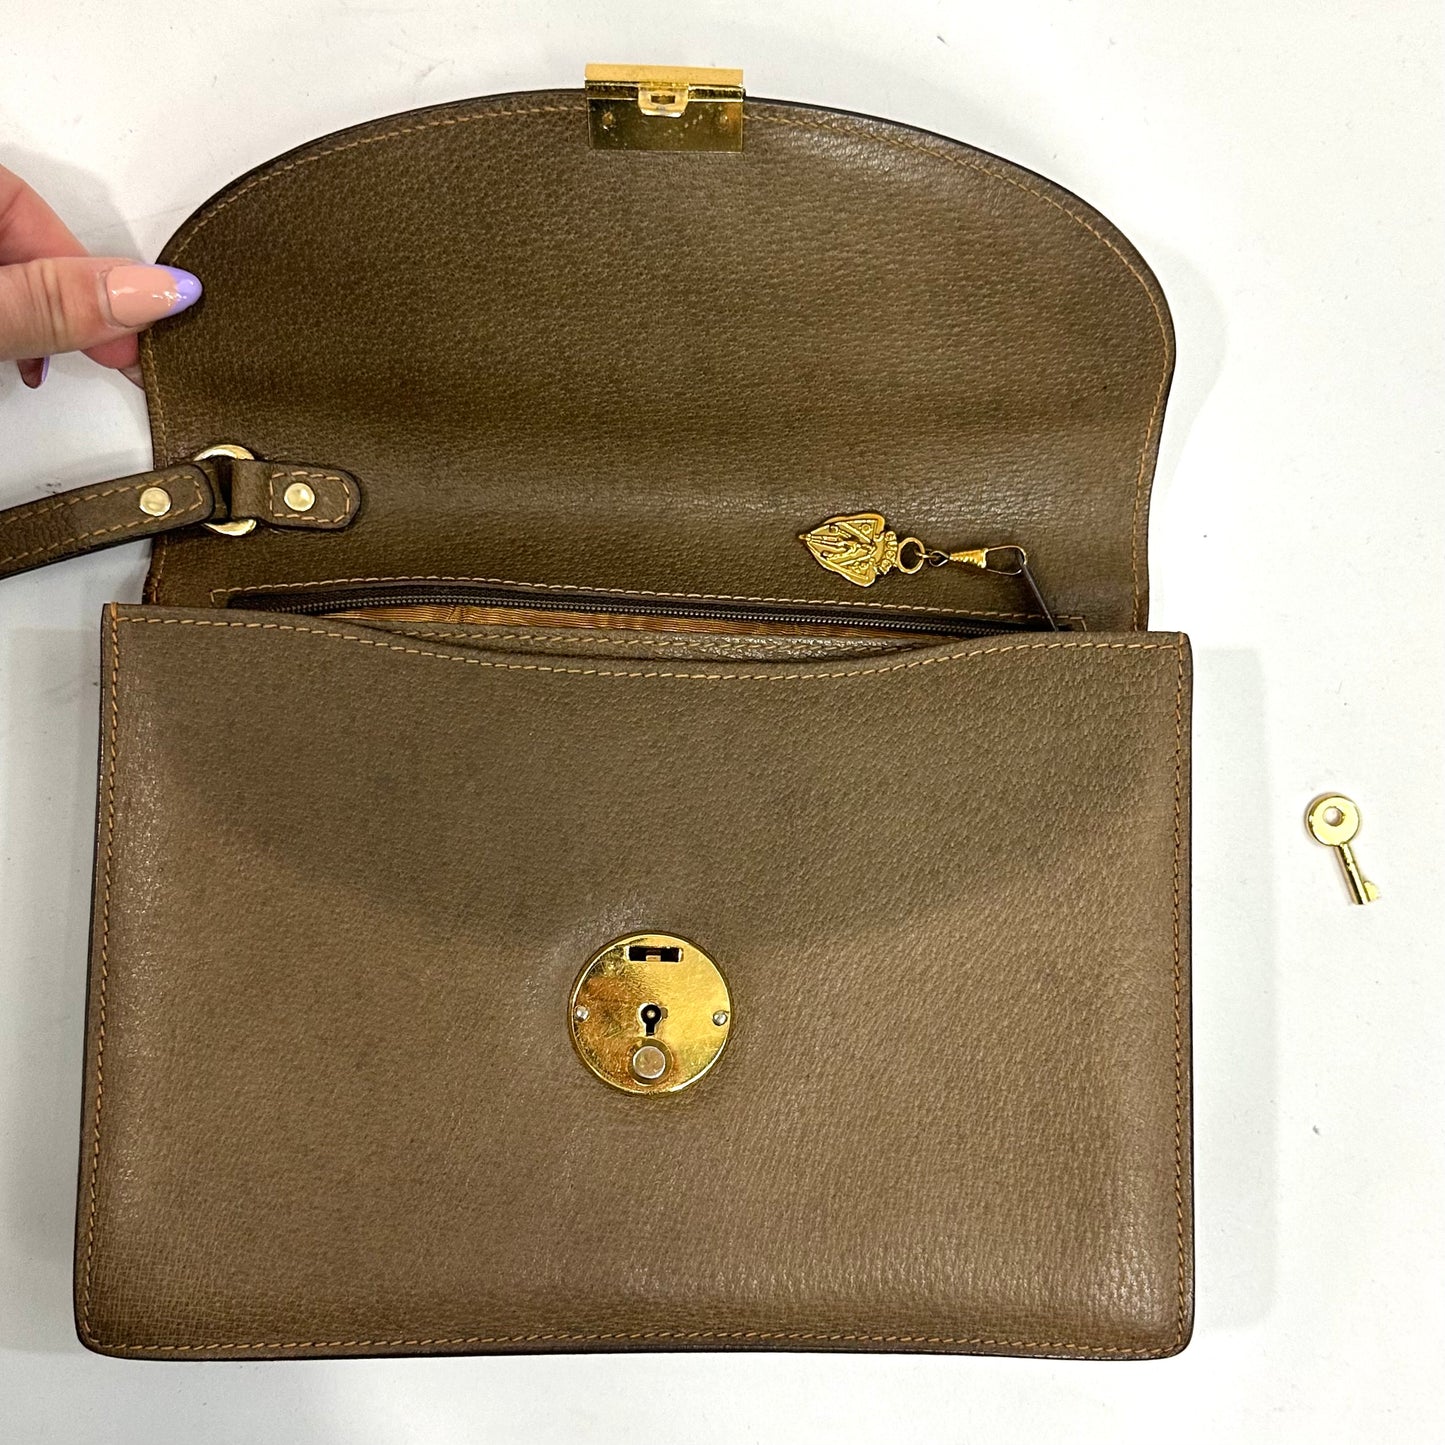 Vintage Gucci Leather Locking Envelope Clutch